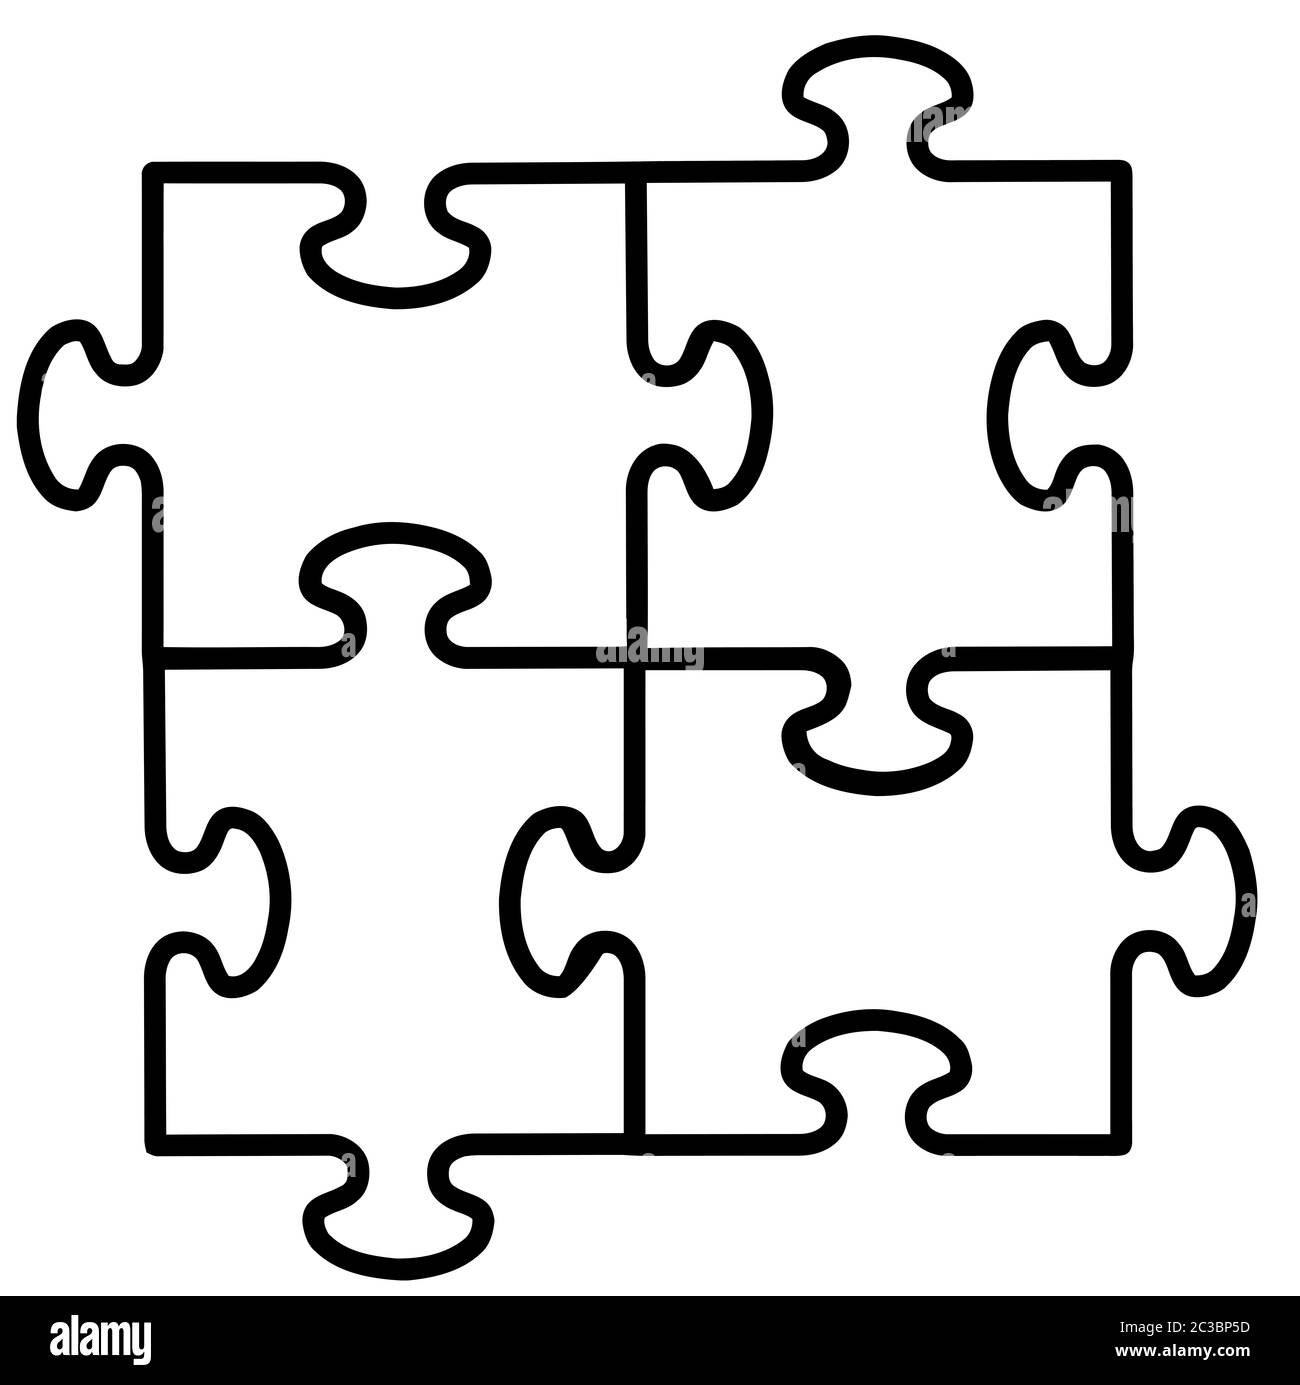 jigsaw piece puzzle game transparent classic shape illustration Stock Photo  - Alamy